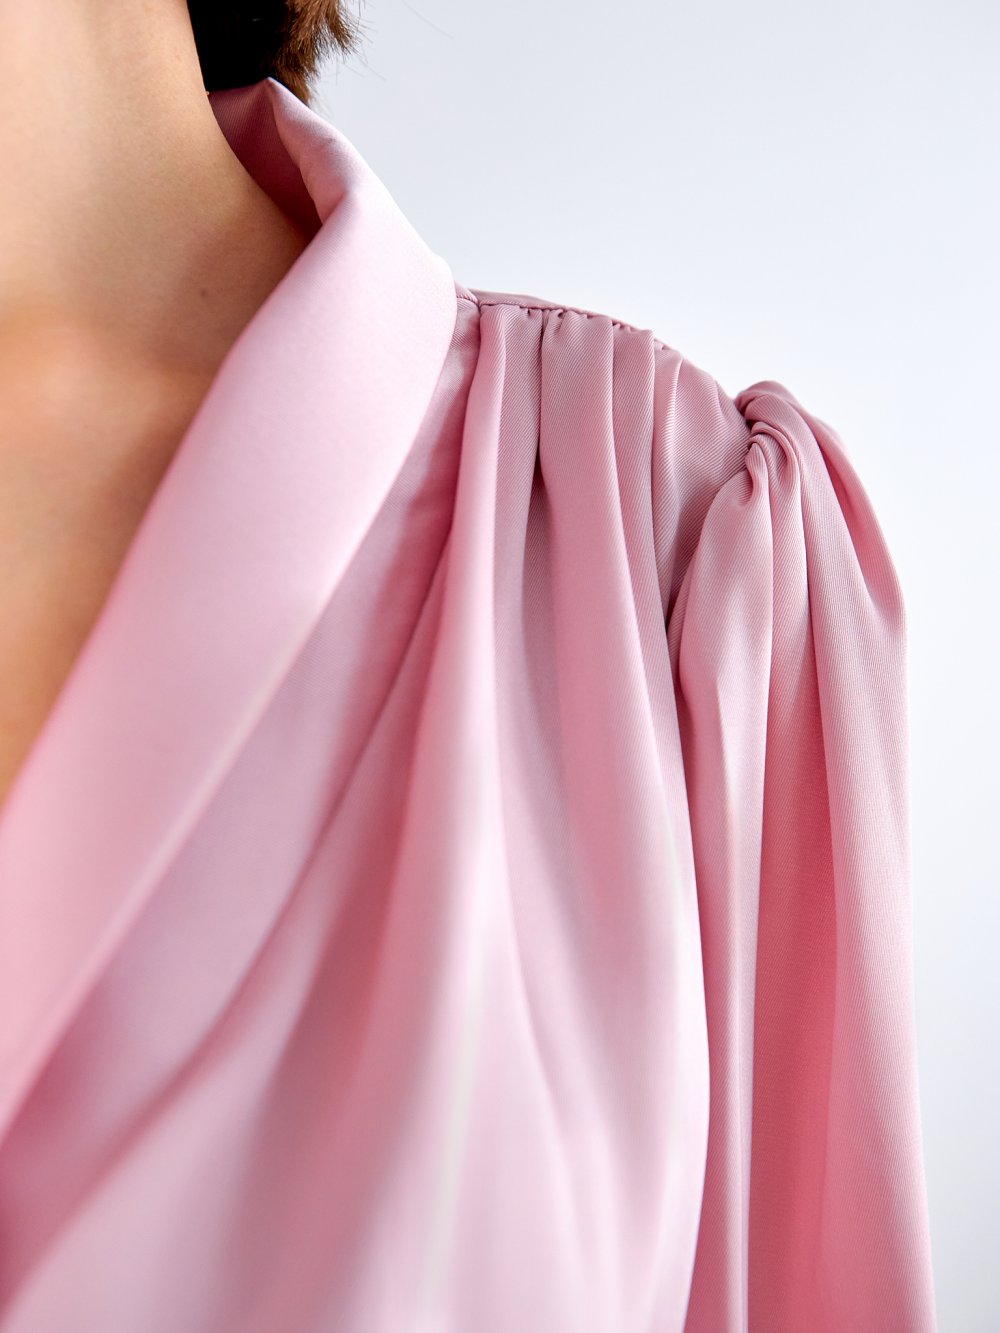 Bledoružové šaty Francesca